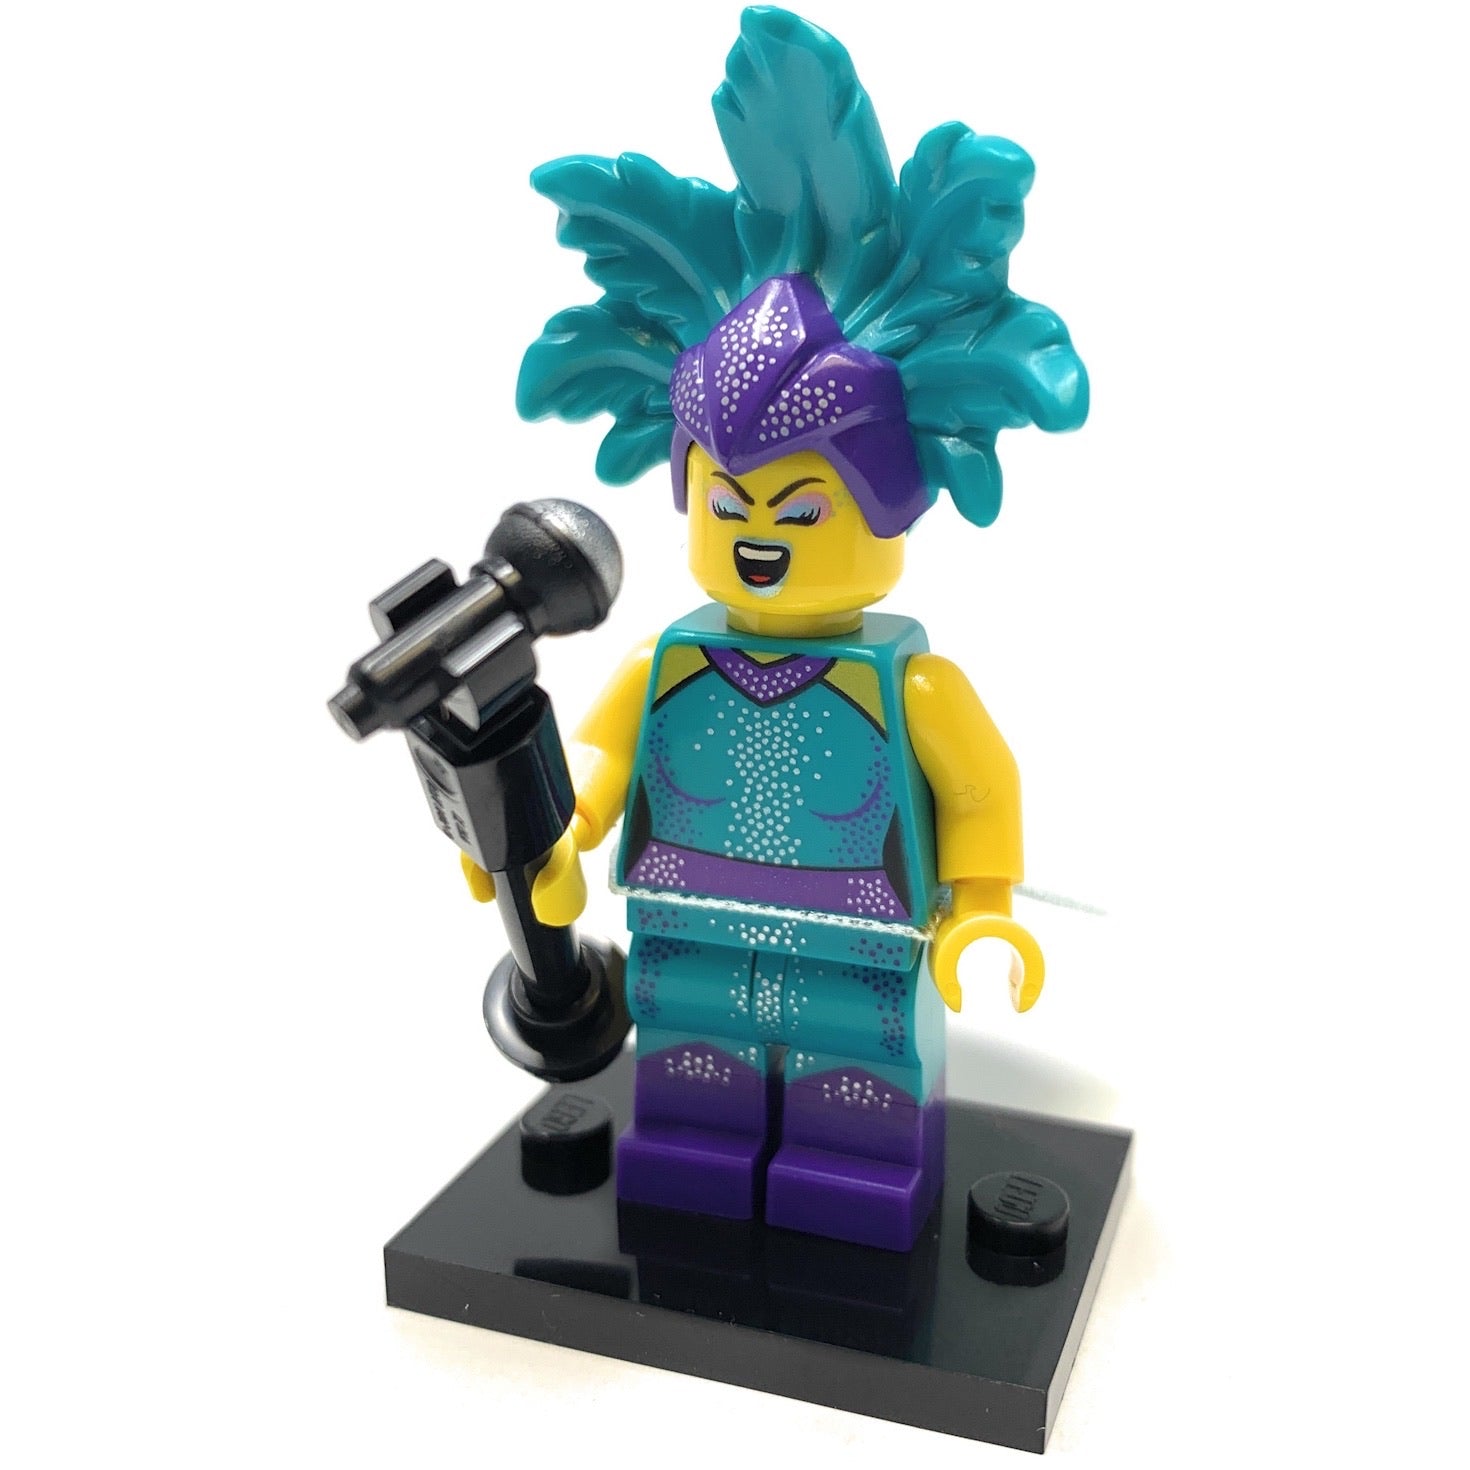 Singer - LEGO Series 21 Collectible Minifigure